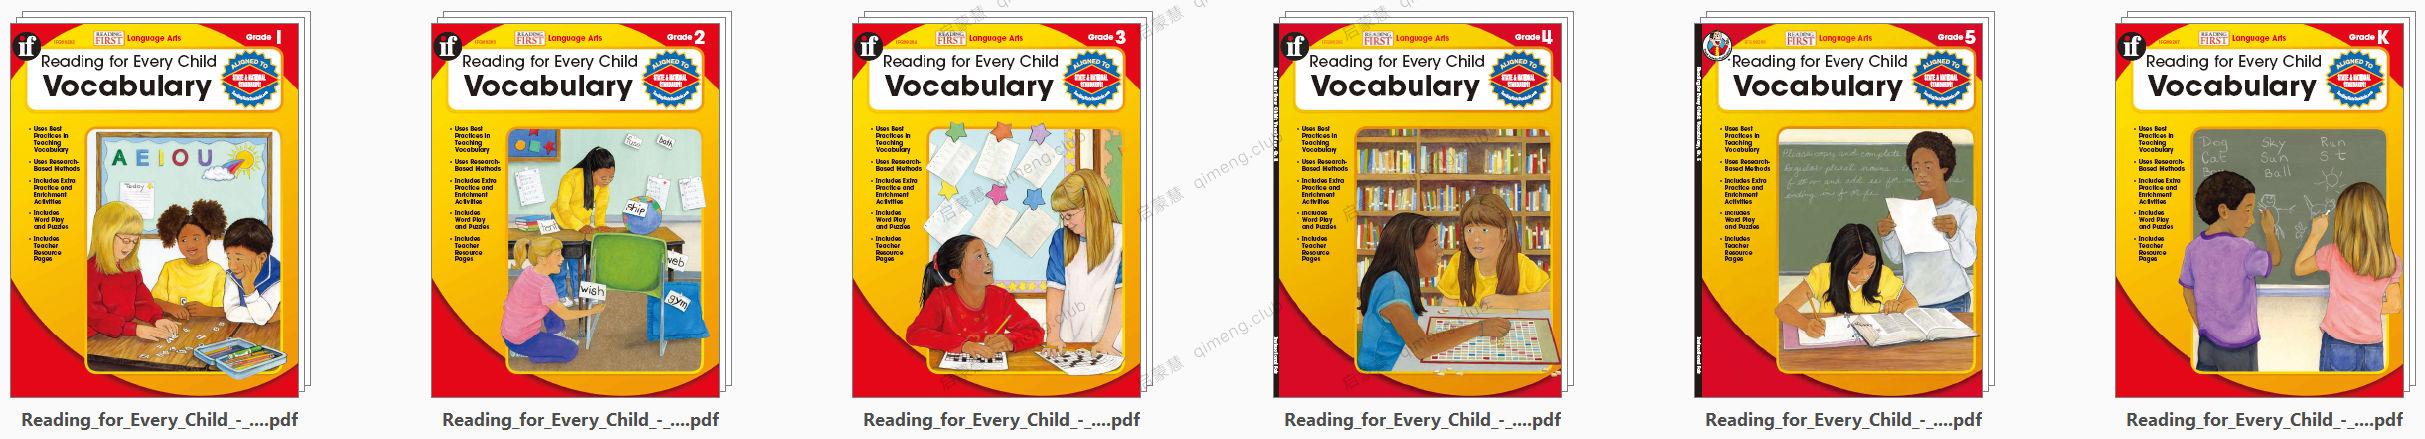 必收阅读理解词汇练习册！《Reading for Every Child Vocabulary》共6册 GK-G5 带答案